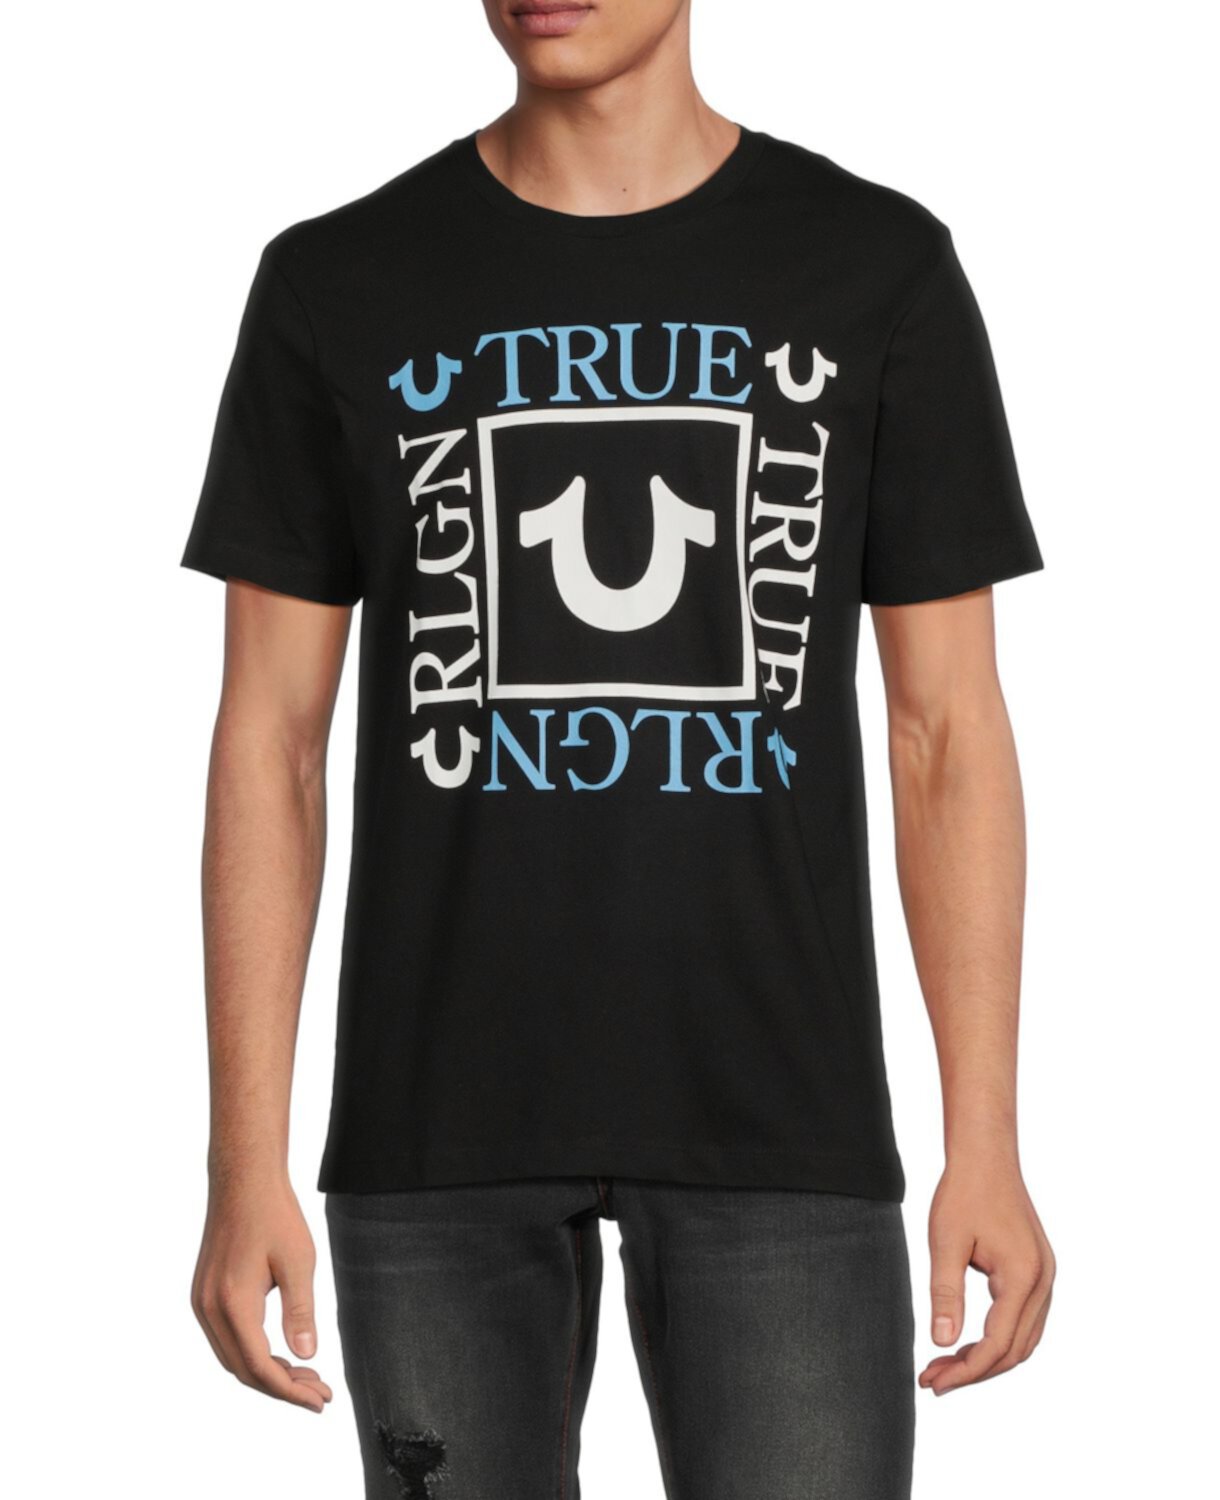 Одежда true. True Religion майка. True Religion футболка. True logo.